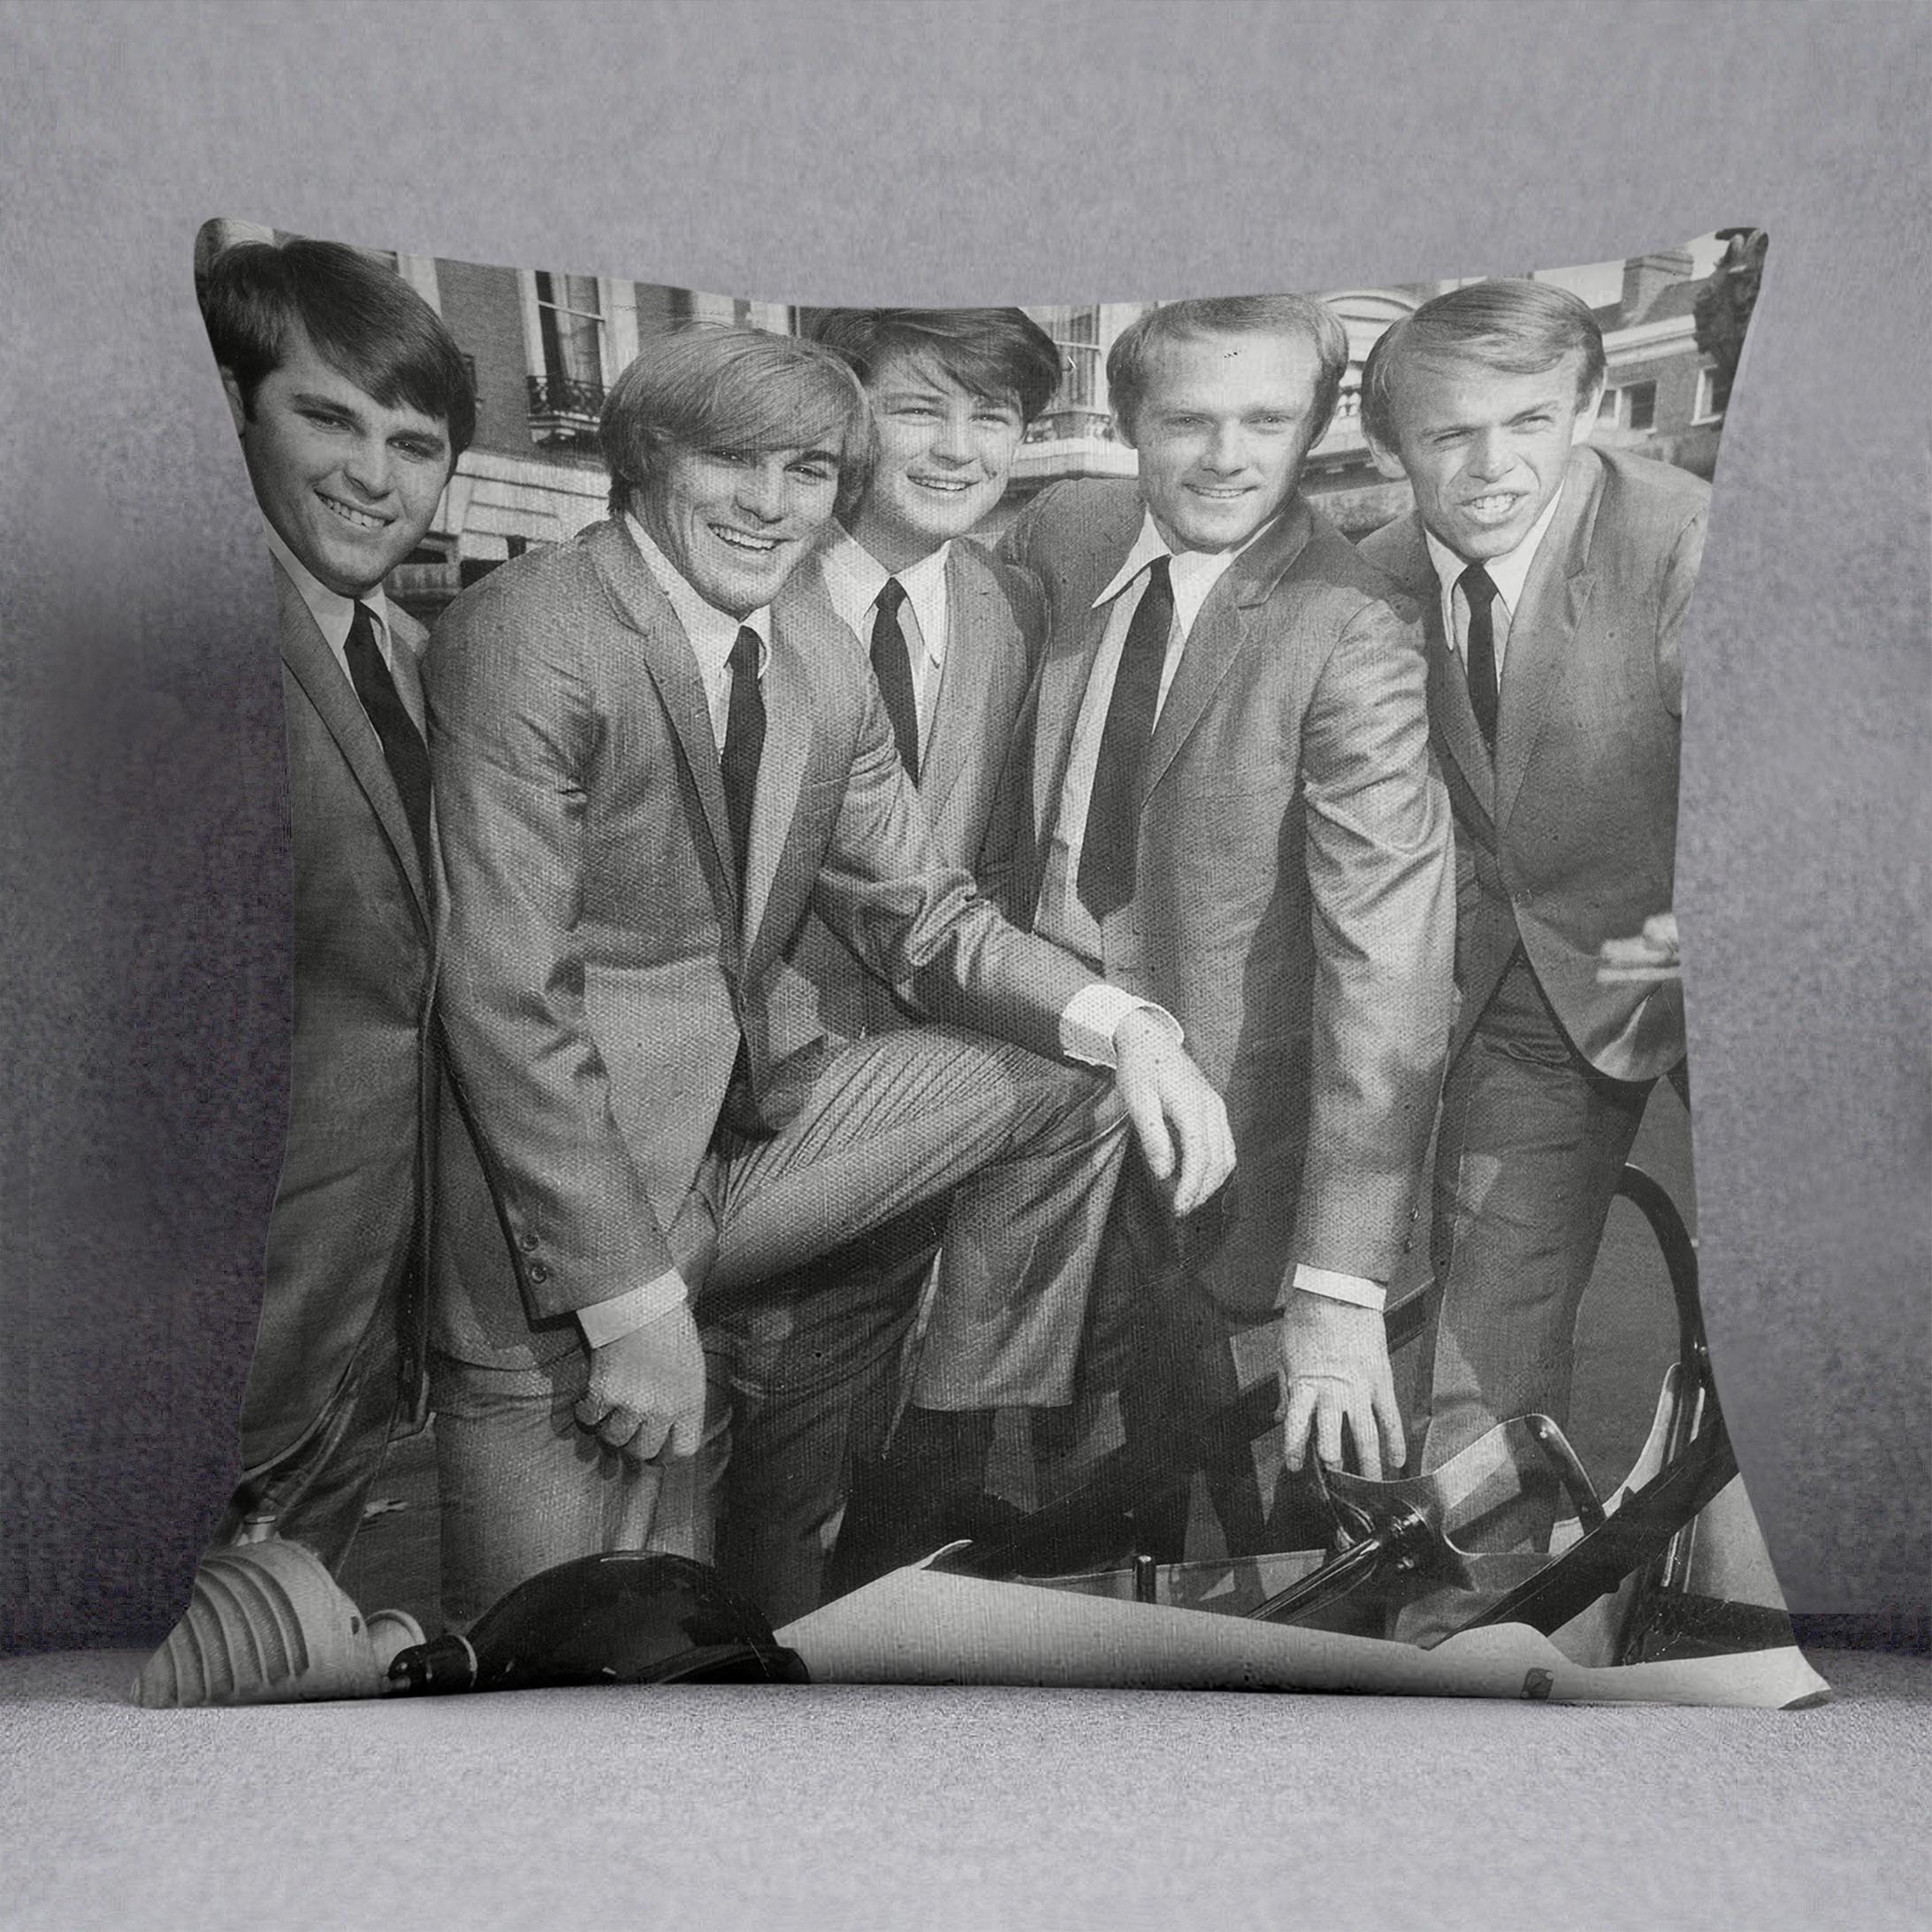 Beach Boys in suits Cushion